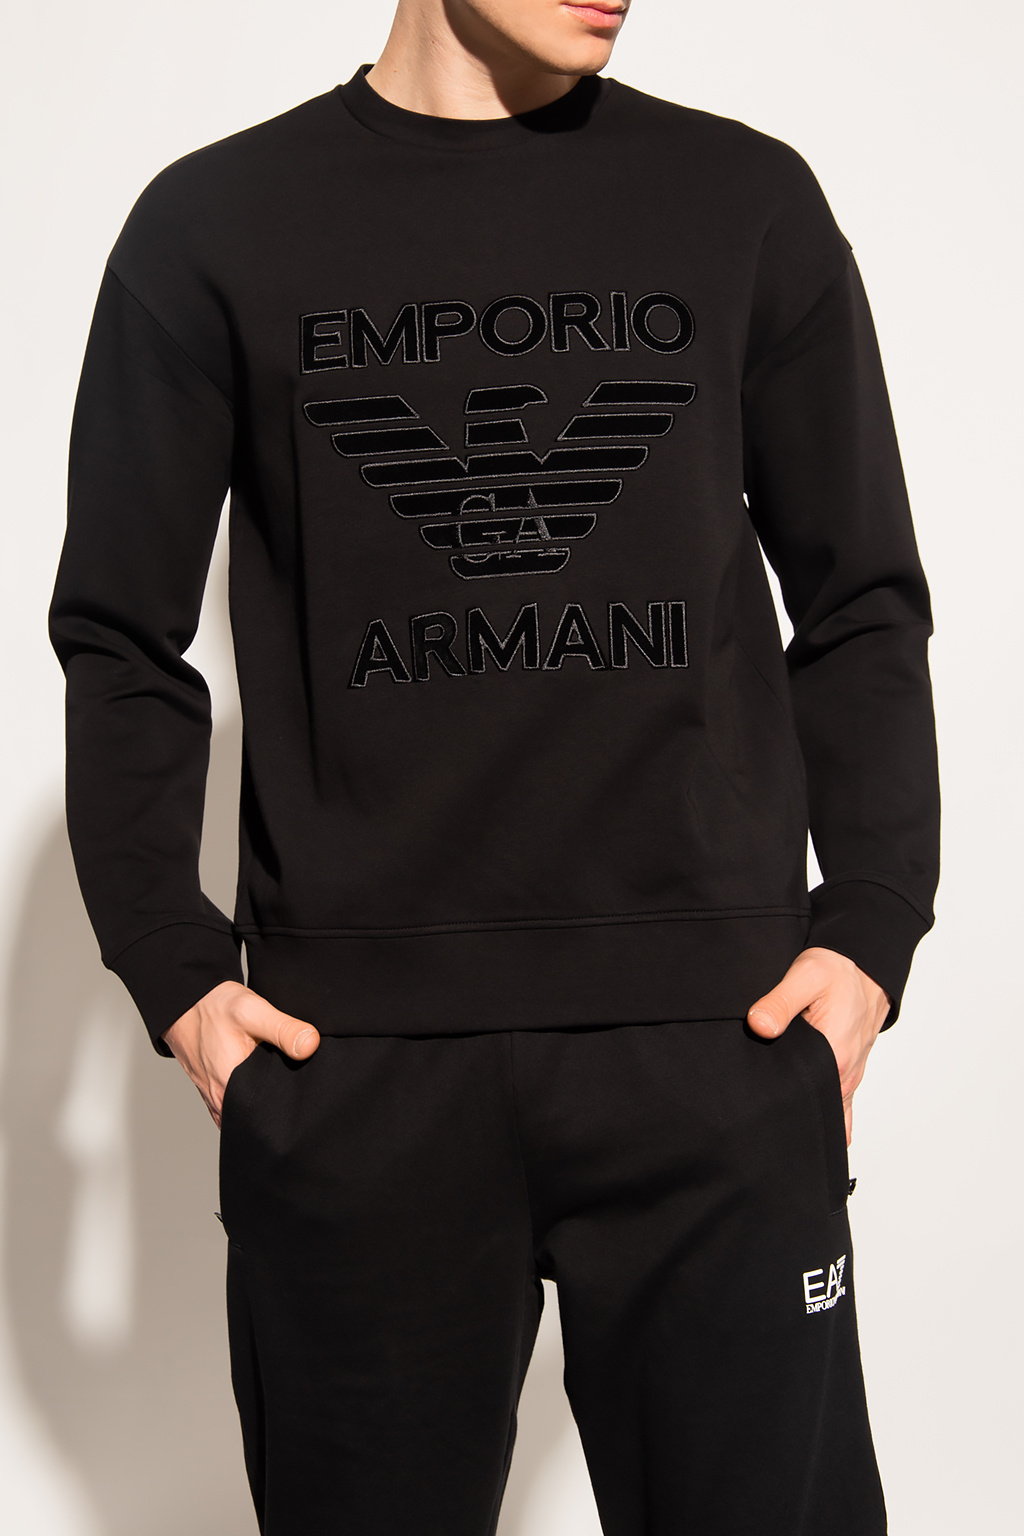 Emporio Armani Emporio Armani Kids Baby Boyswhite And Blue Cotton Suit With Logo